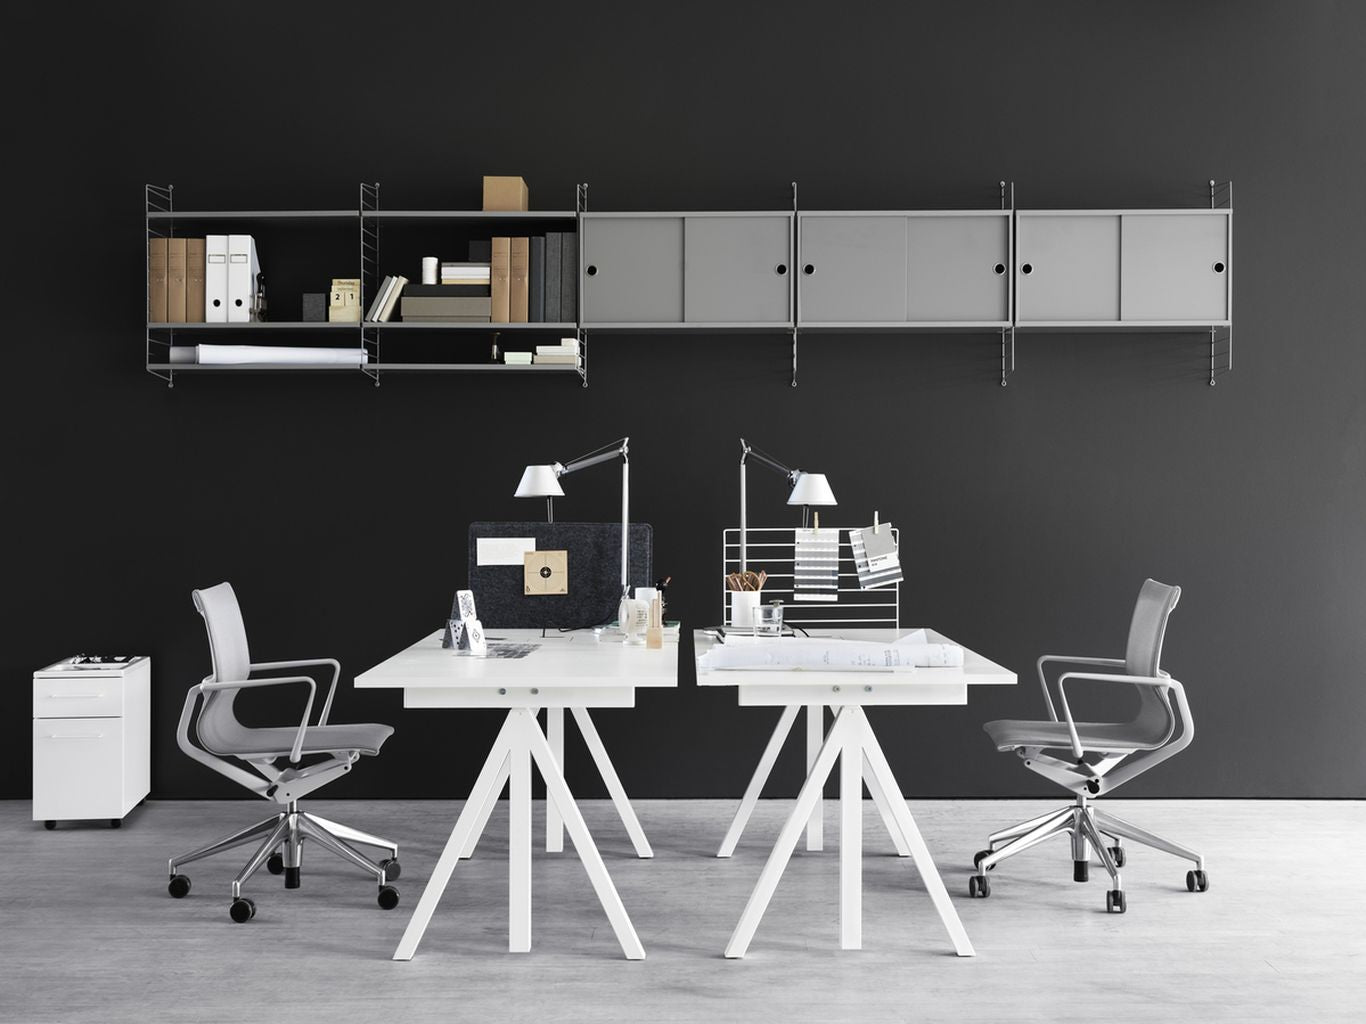 String Furniture Height Adjustable Work Table 90x180 Cm, White Laminate